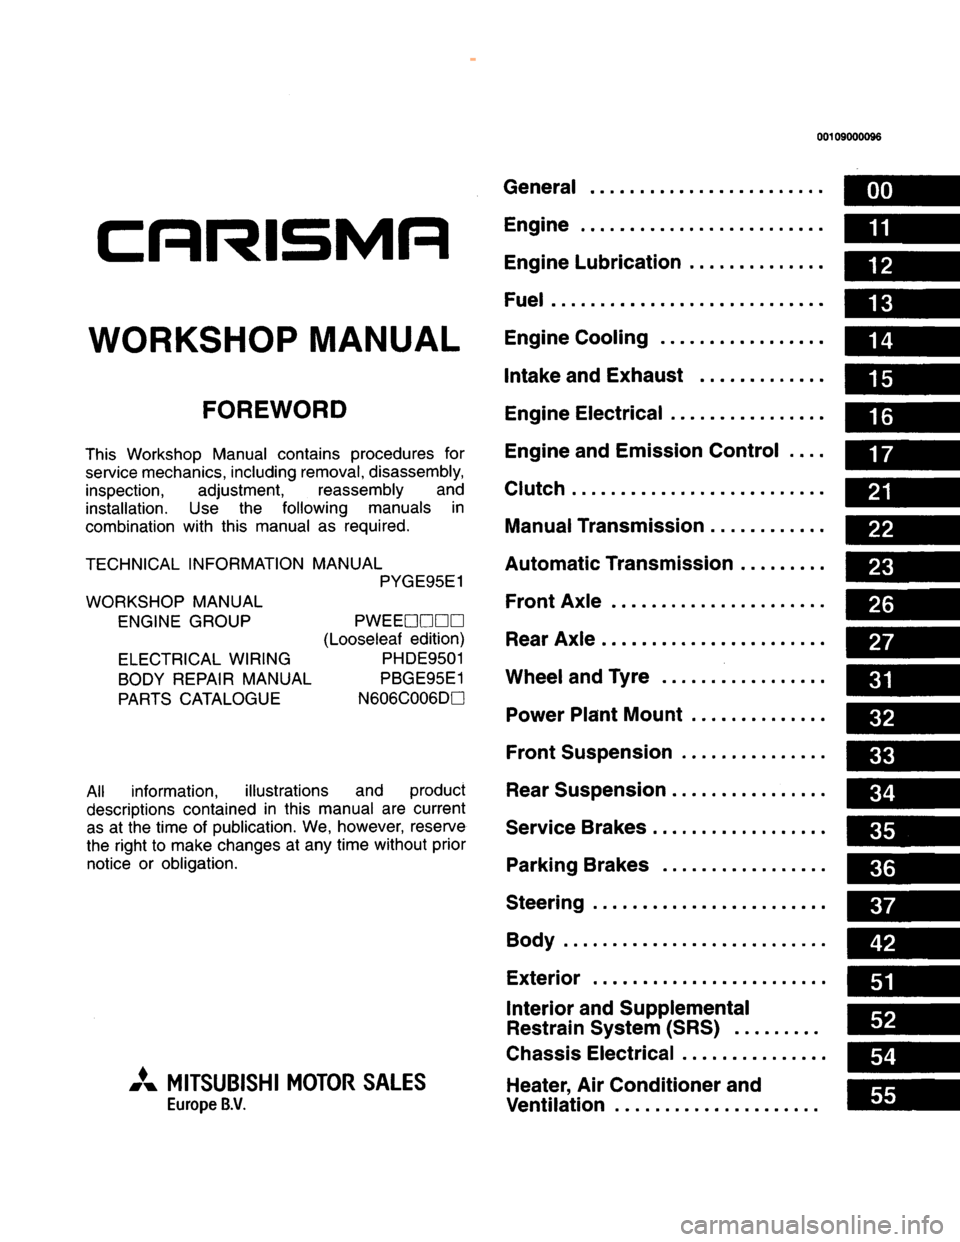 MITSUBISHI CARISMA 1995  Workshop Manual 
 
www.WorkshopManuals.co.uk

 
Purchased from www.WorkshopManuals.co.uk 